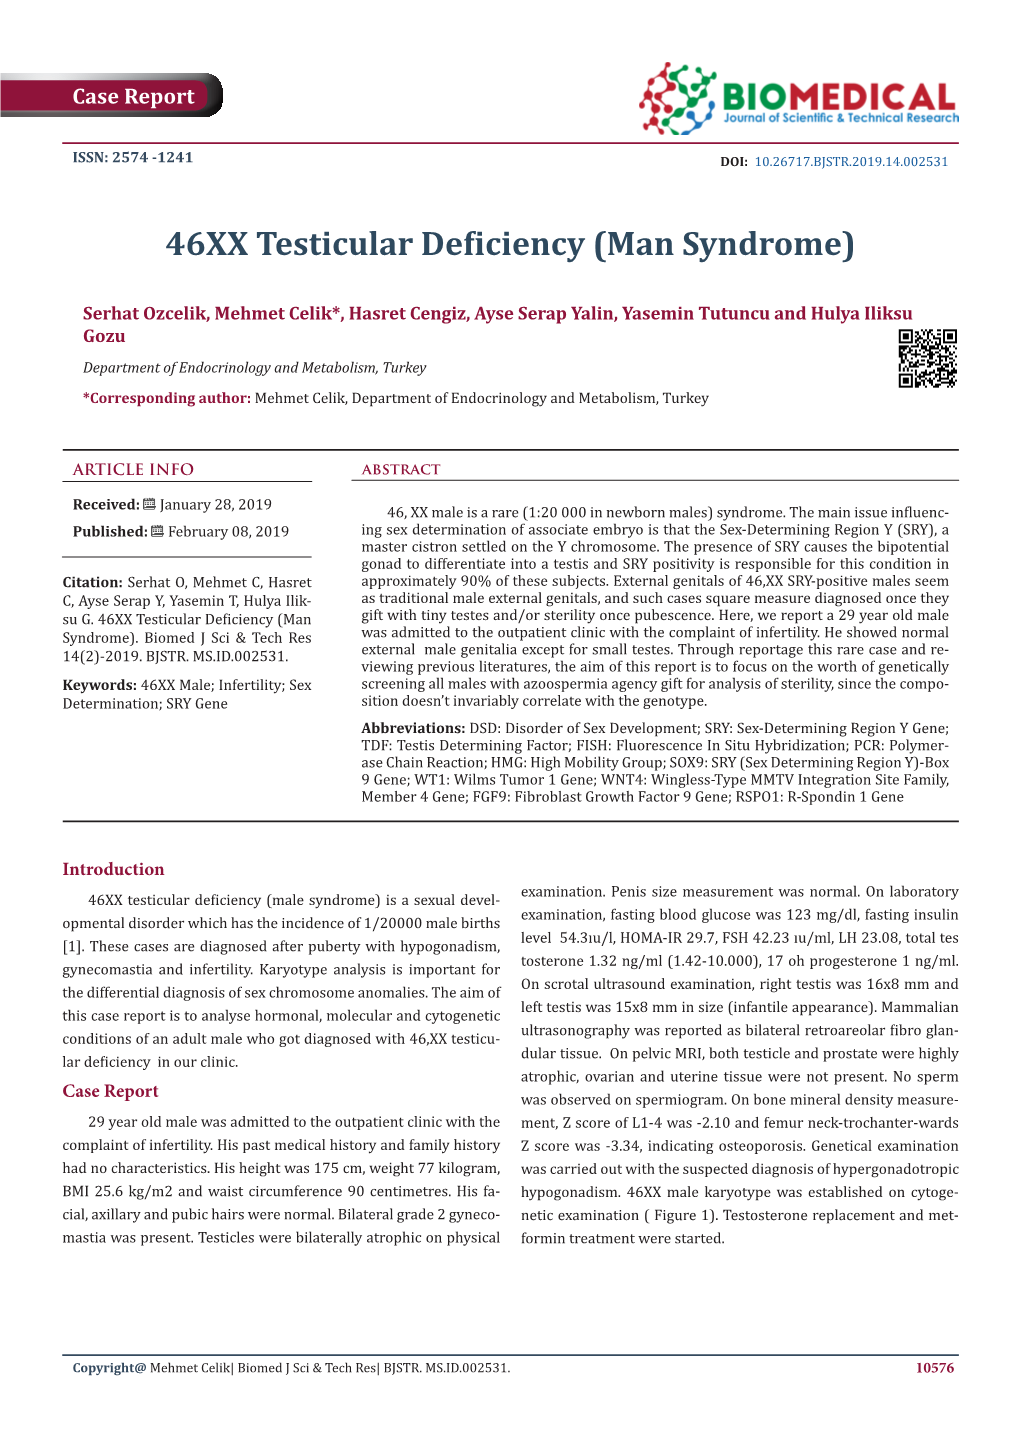 46XX Testicular Deficiency (Man Syndrome)